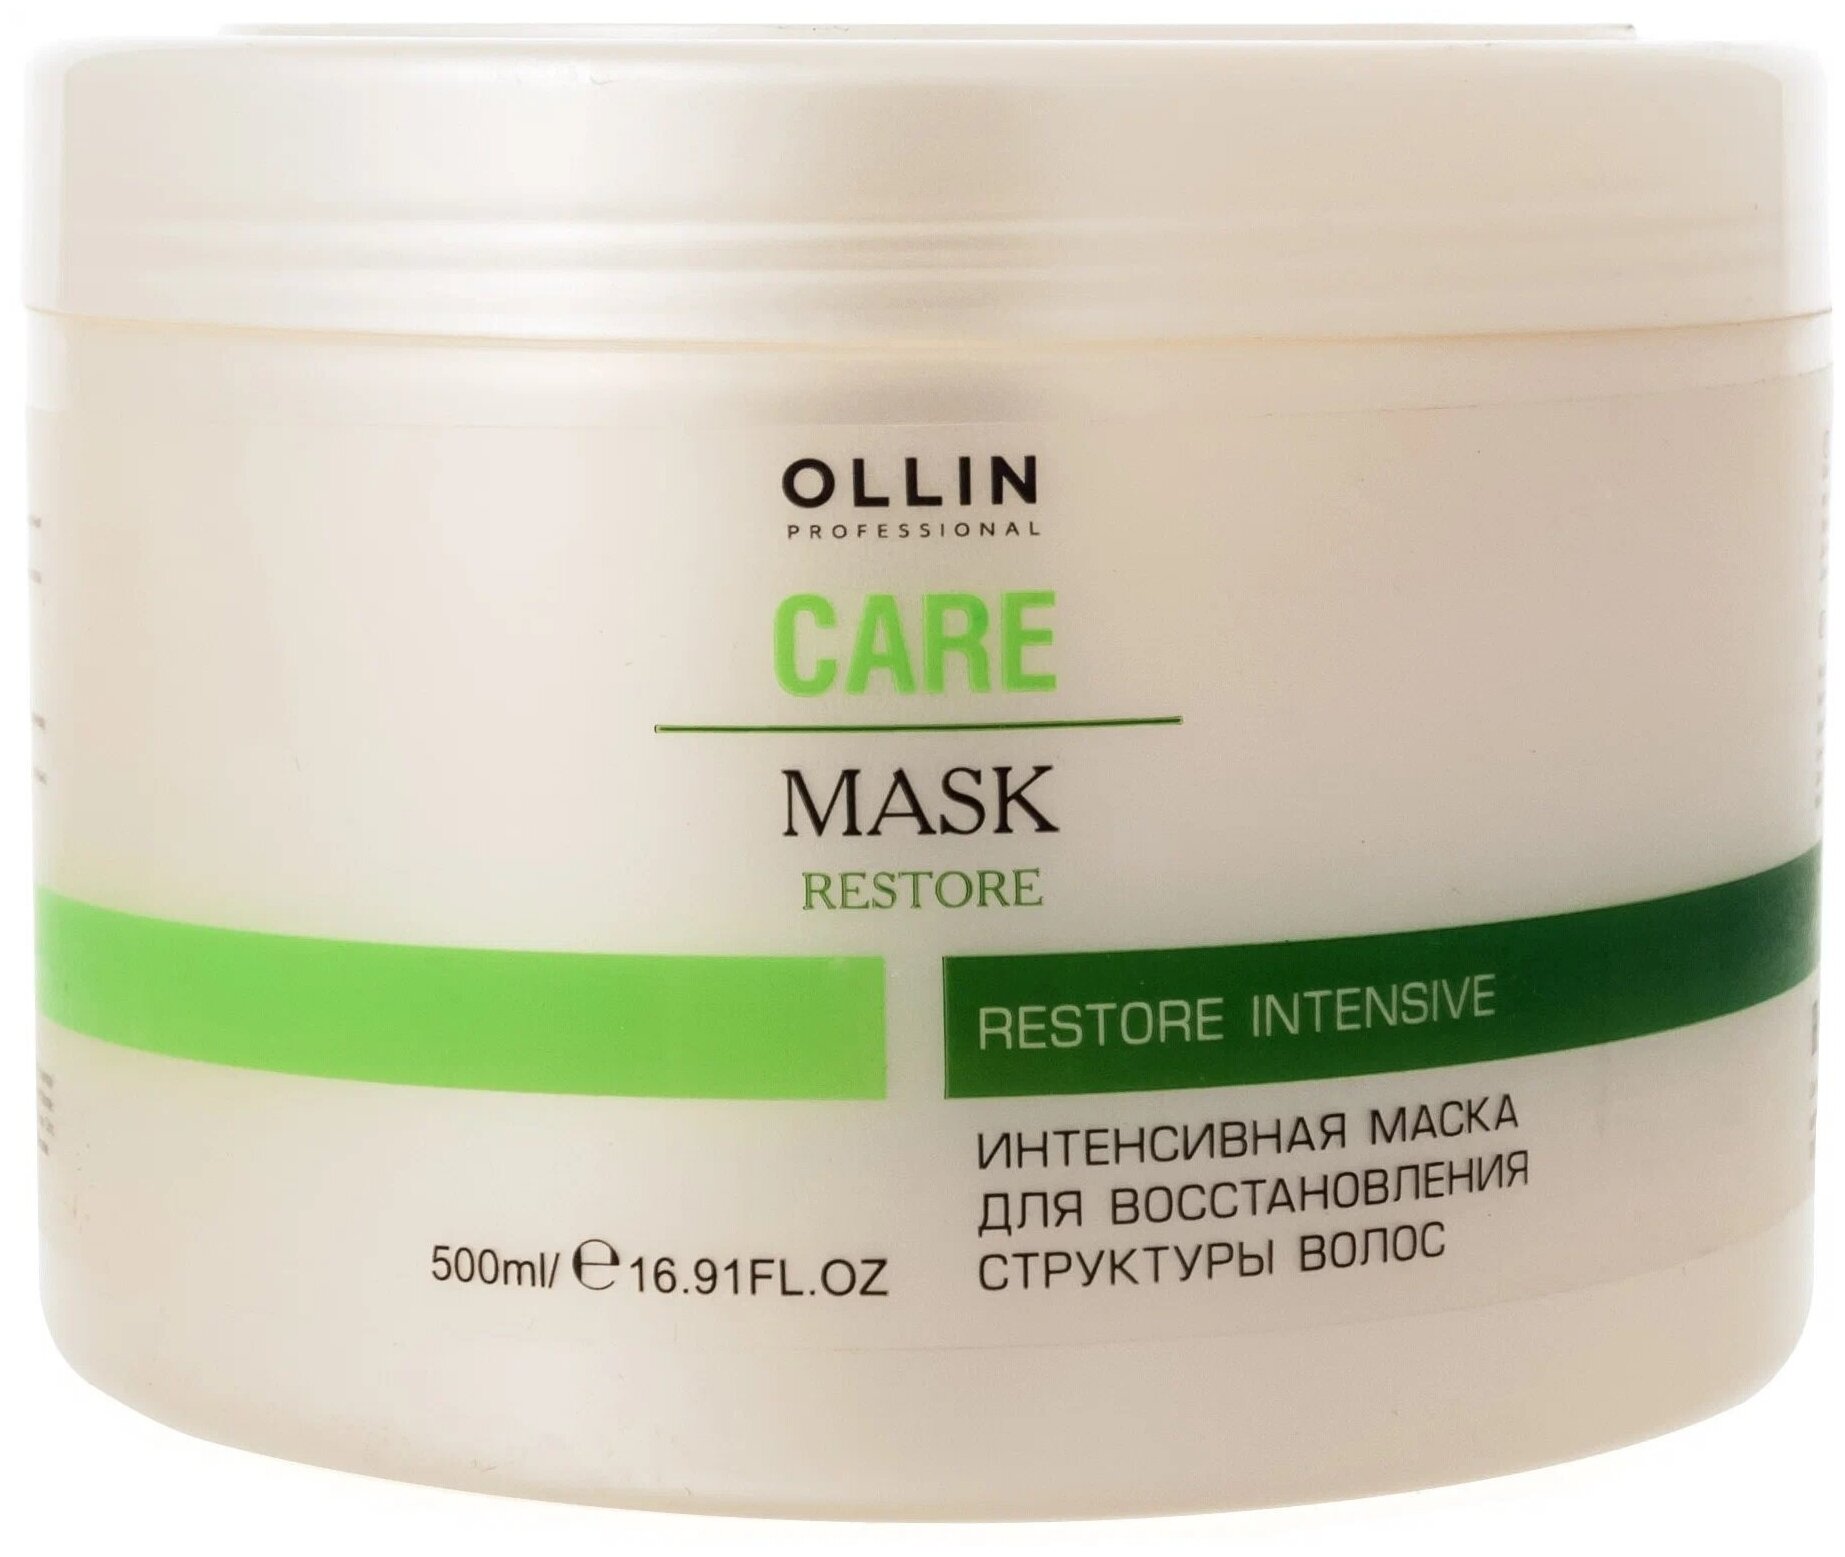 Ollin Professional Mask Интенсивная маска для восстановления структуры волос 500 мл (Ollin Professional, ) - фото №5